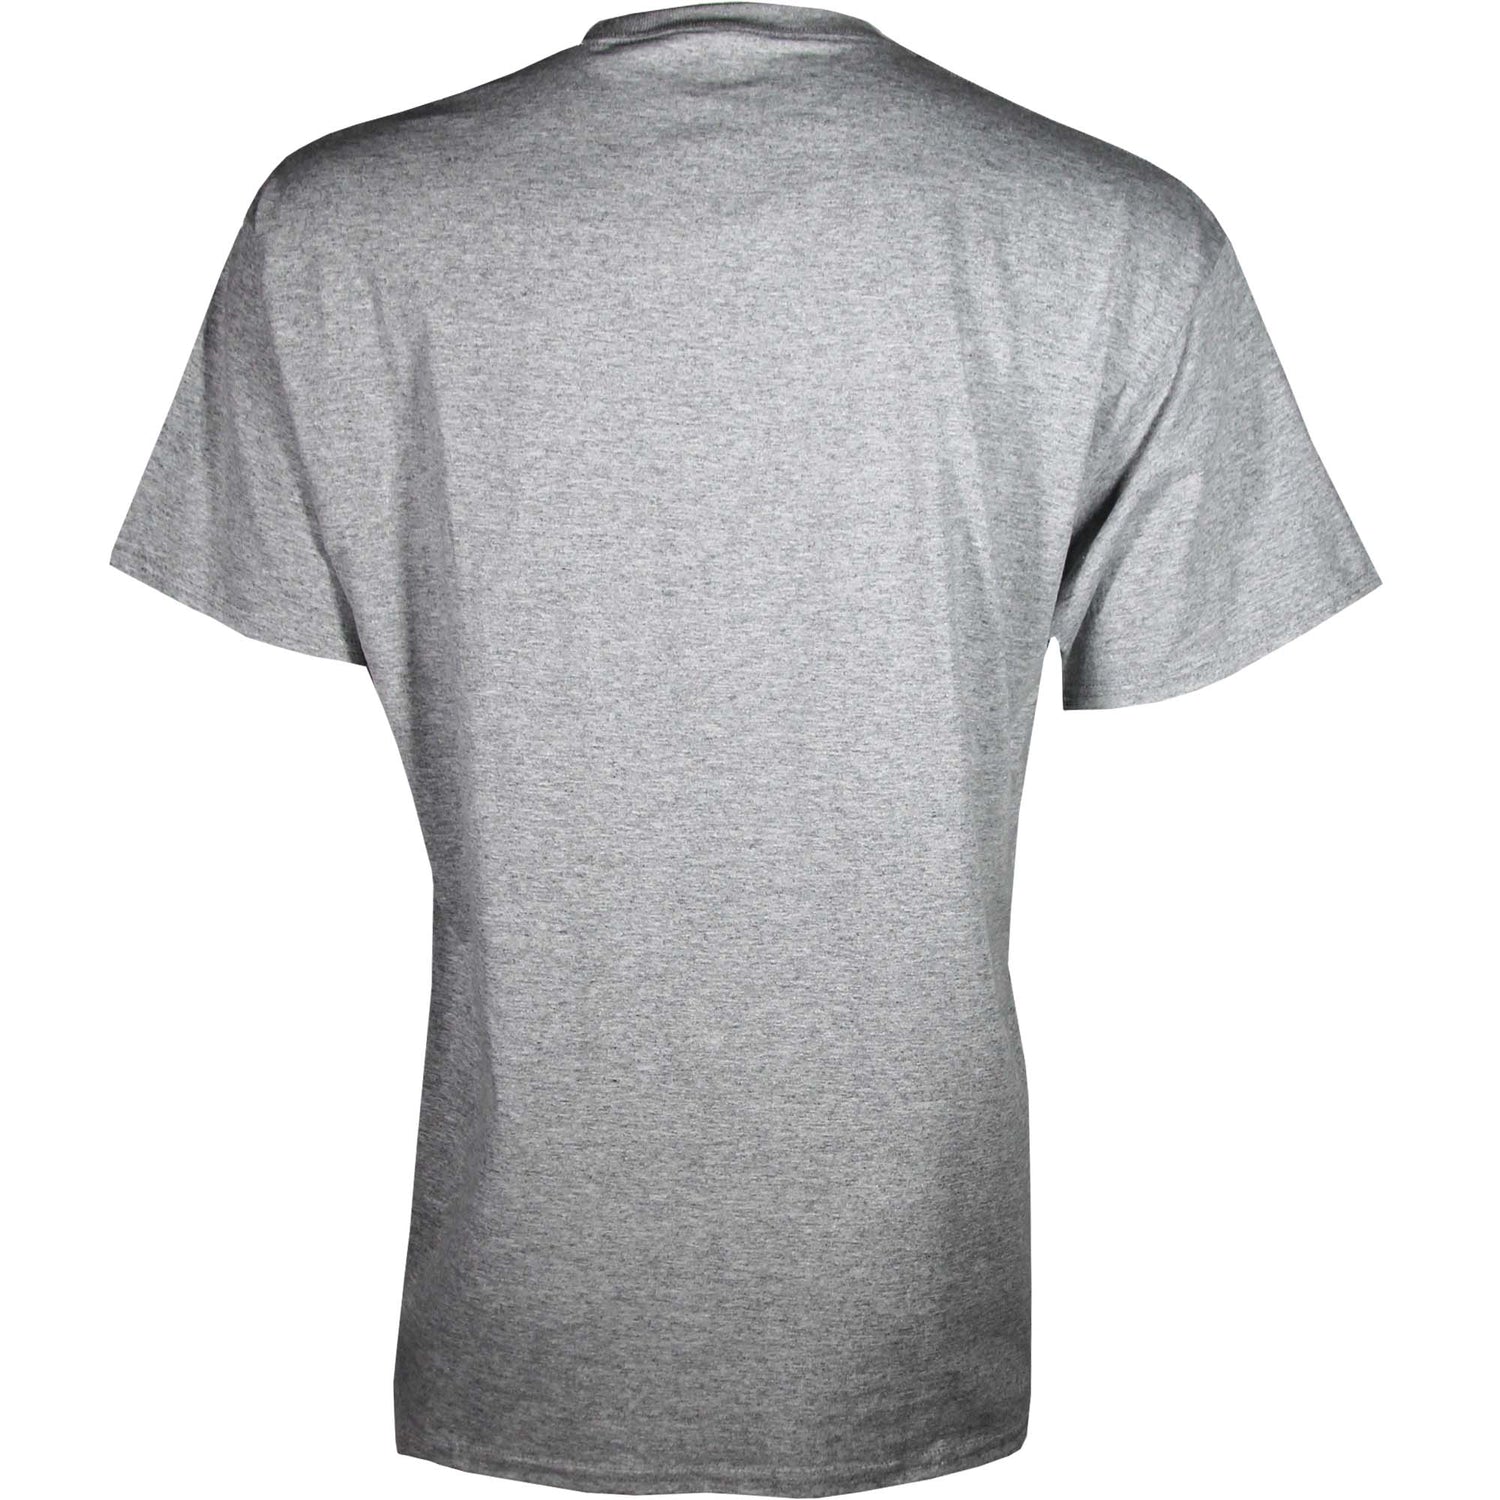 Gold & Silver Pawn Shop Round Neck Basic Short Sleeve T-Shirt Six